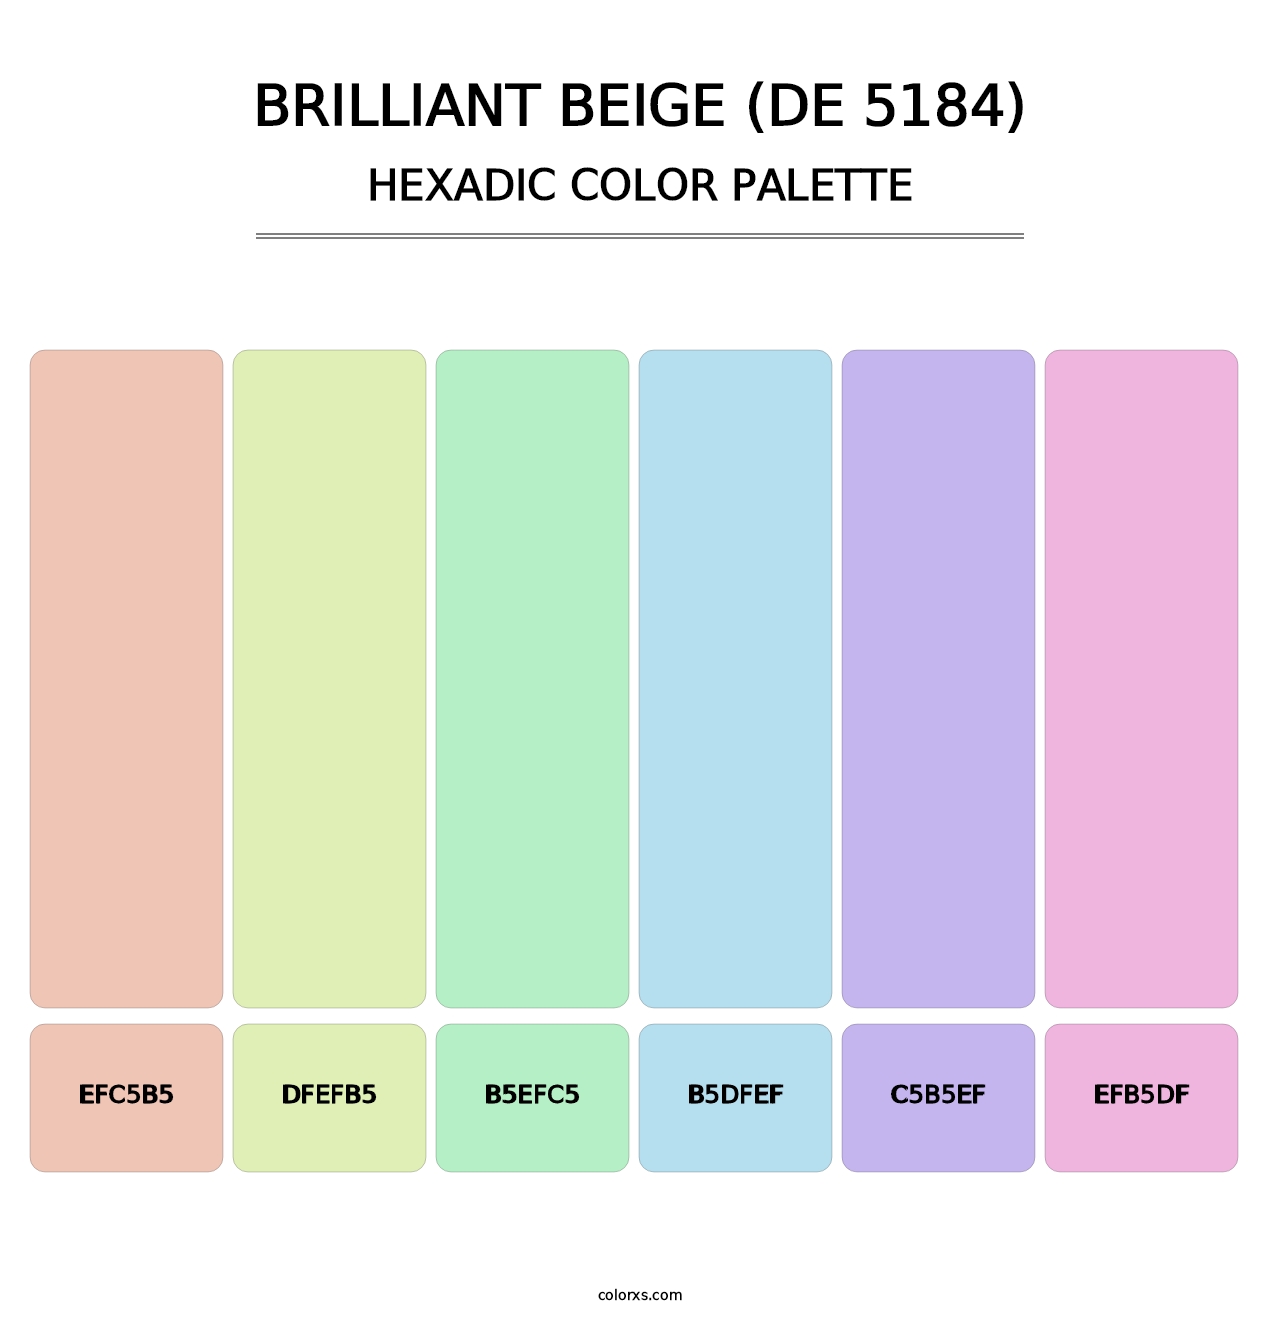 Brilliant Beige (DE 5184) - Hexadic Color Palette